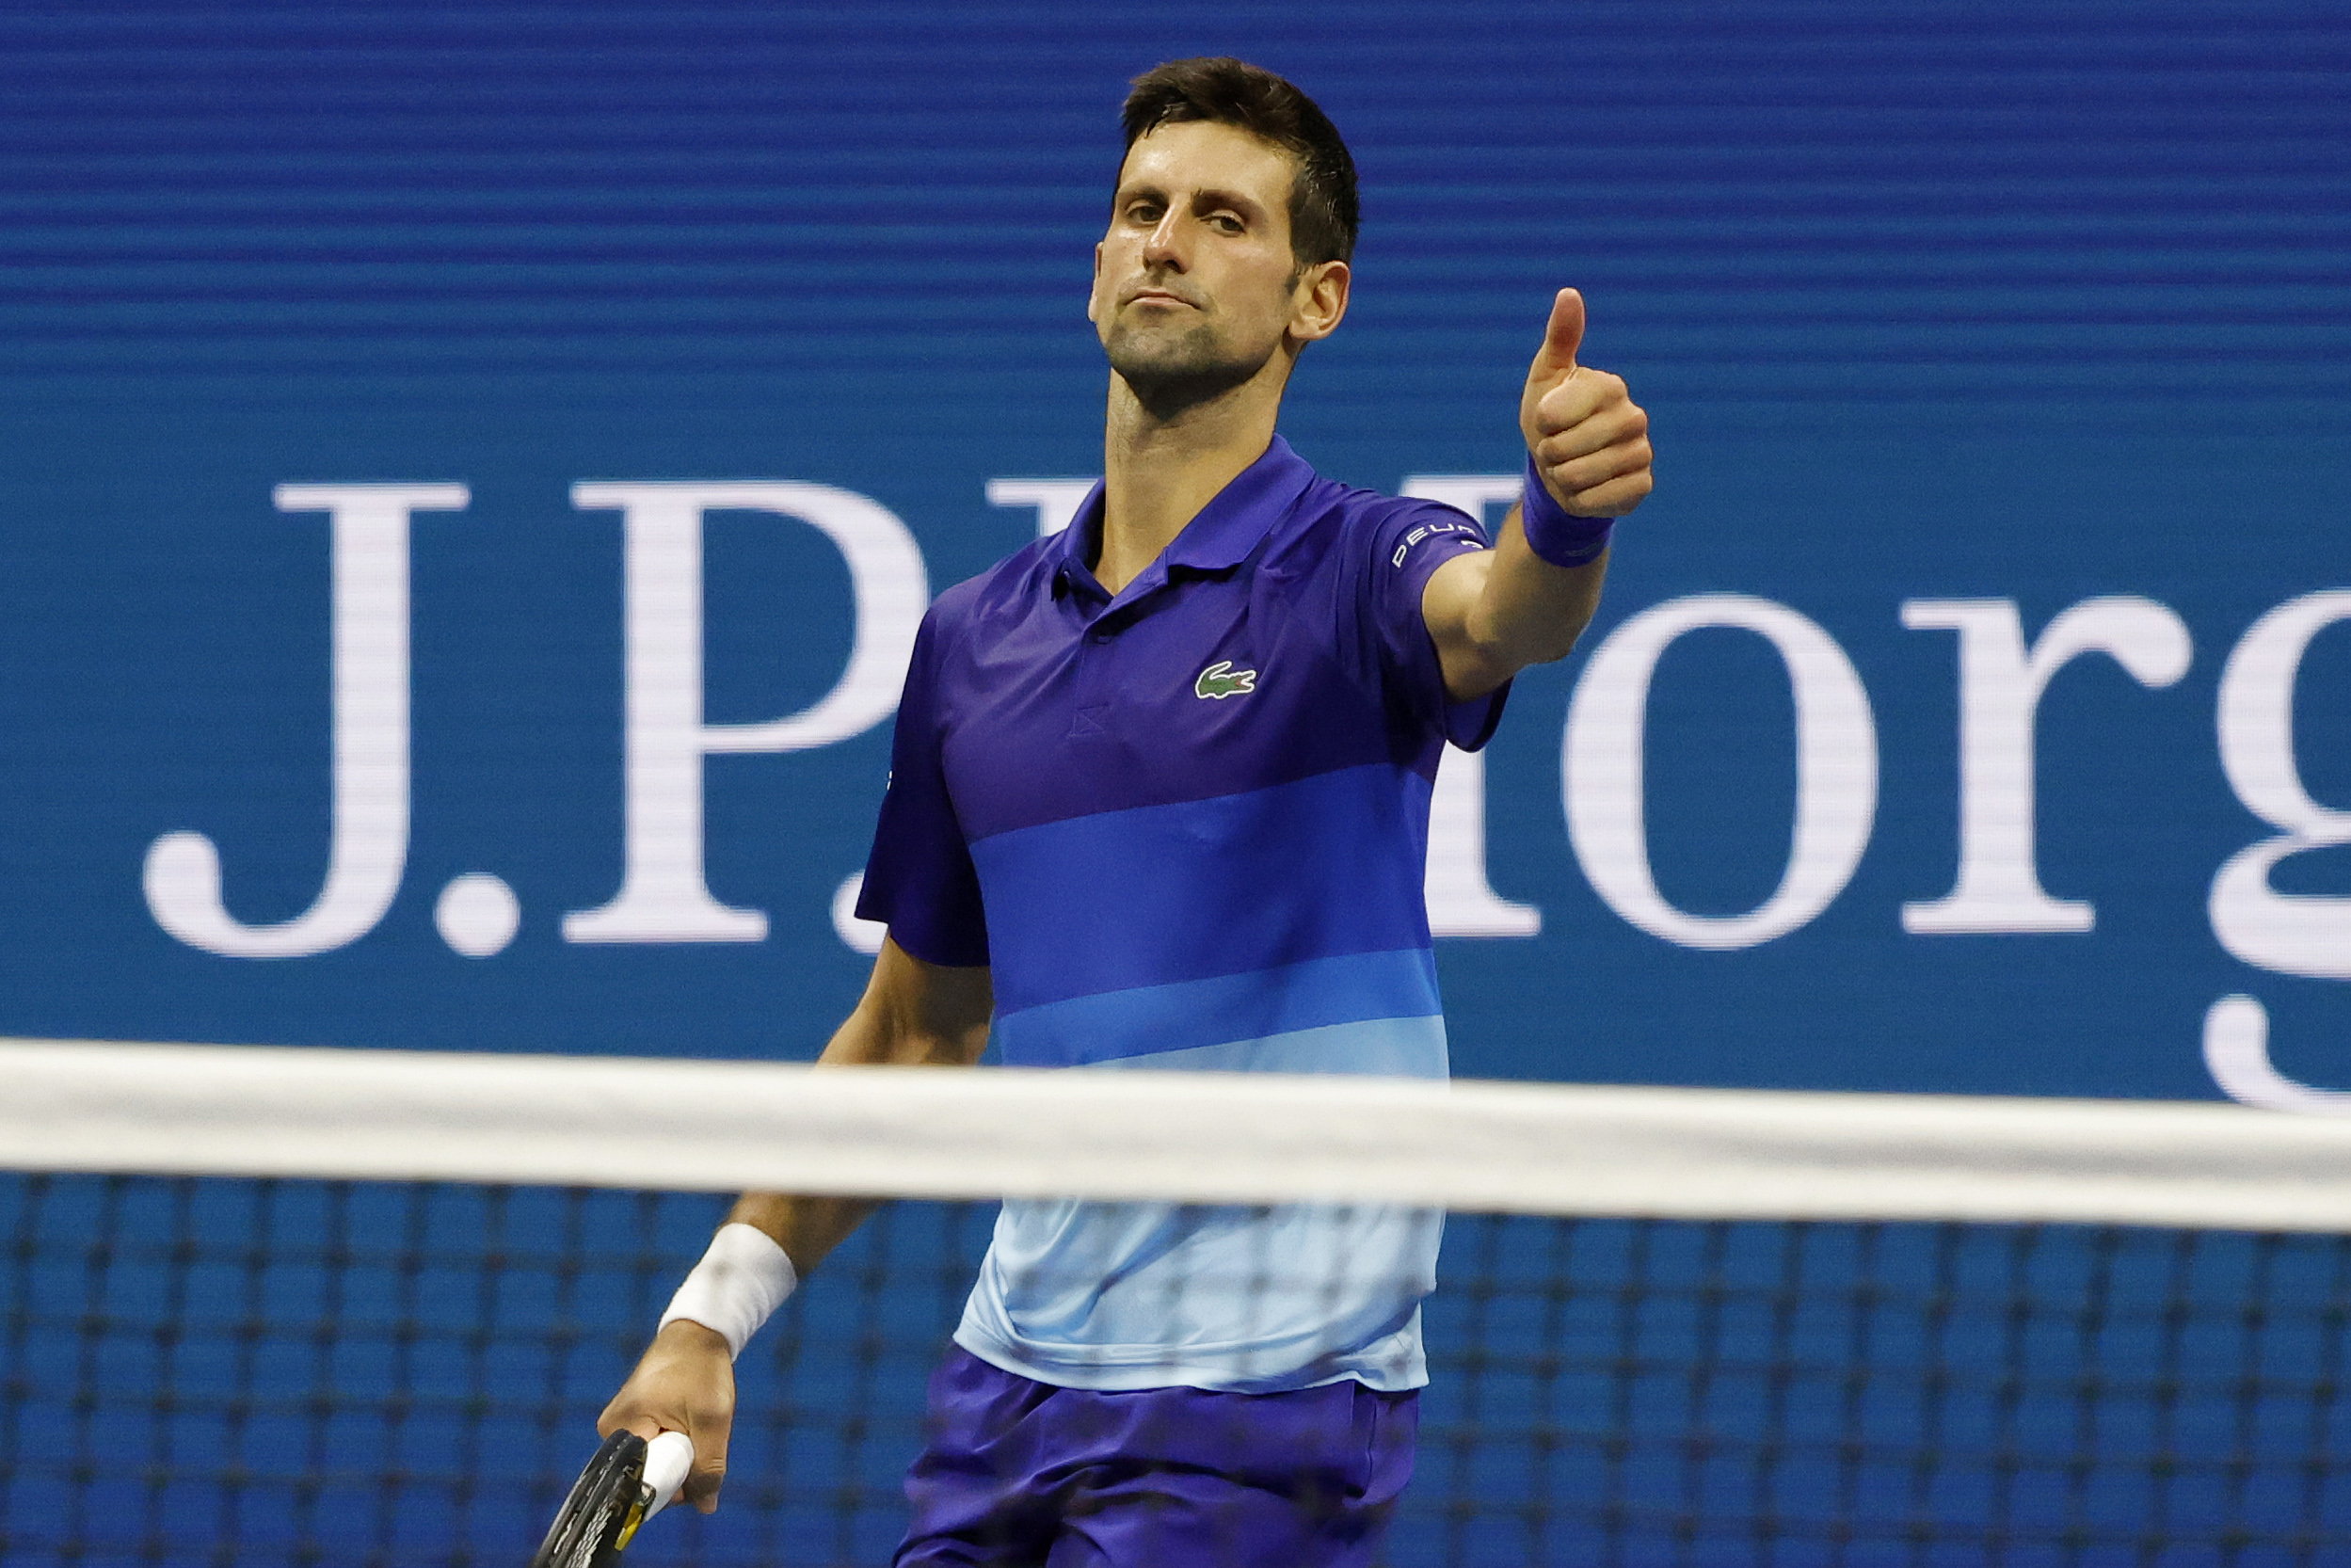 Novak Djokovic US Open